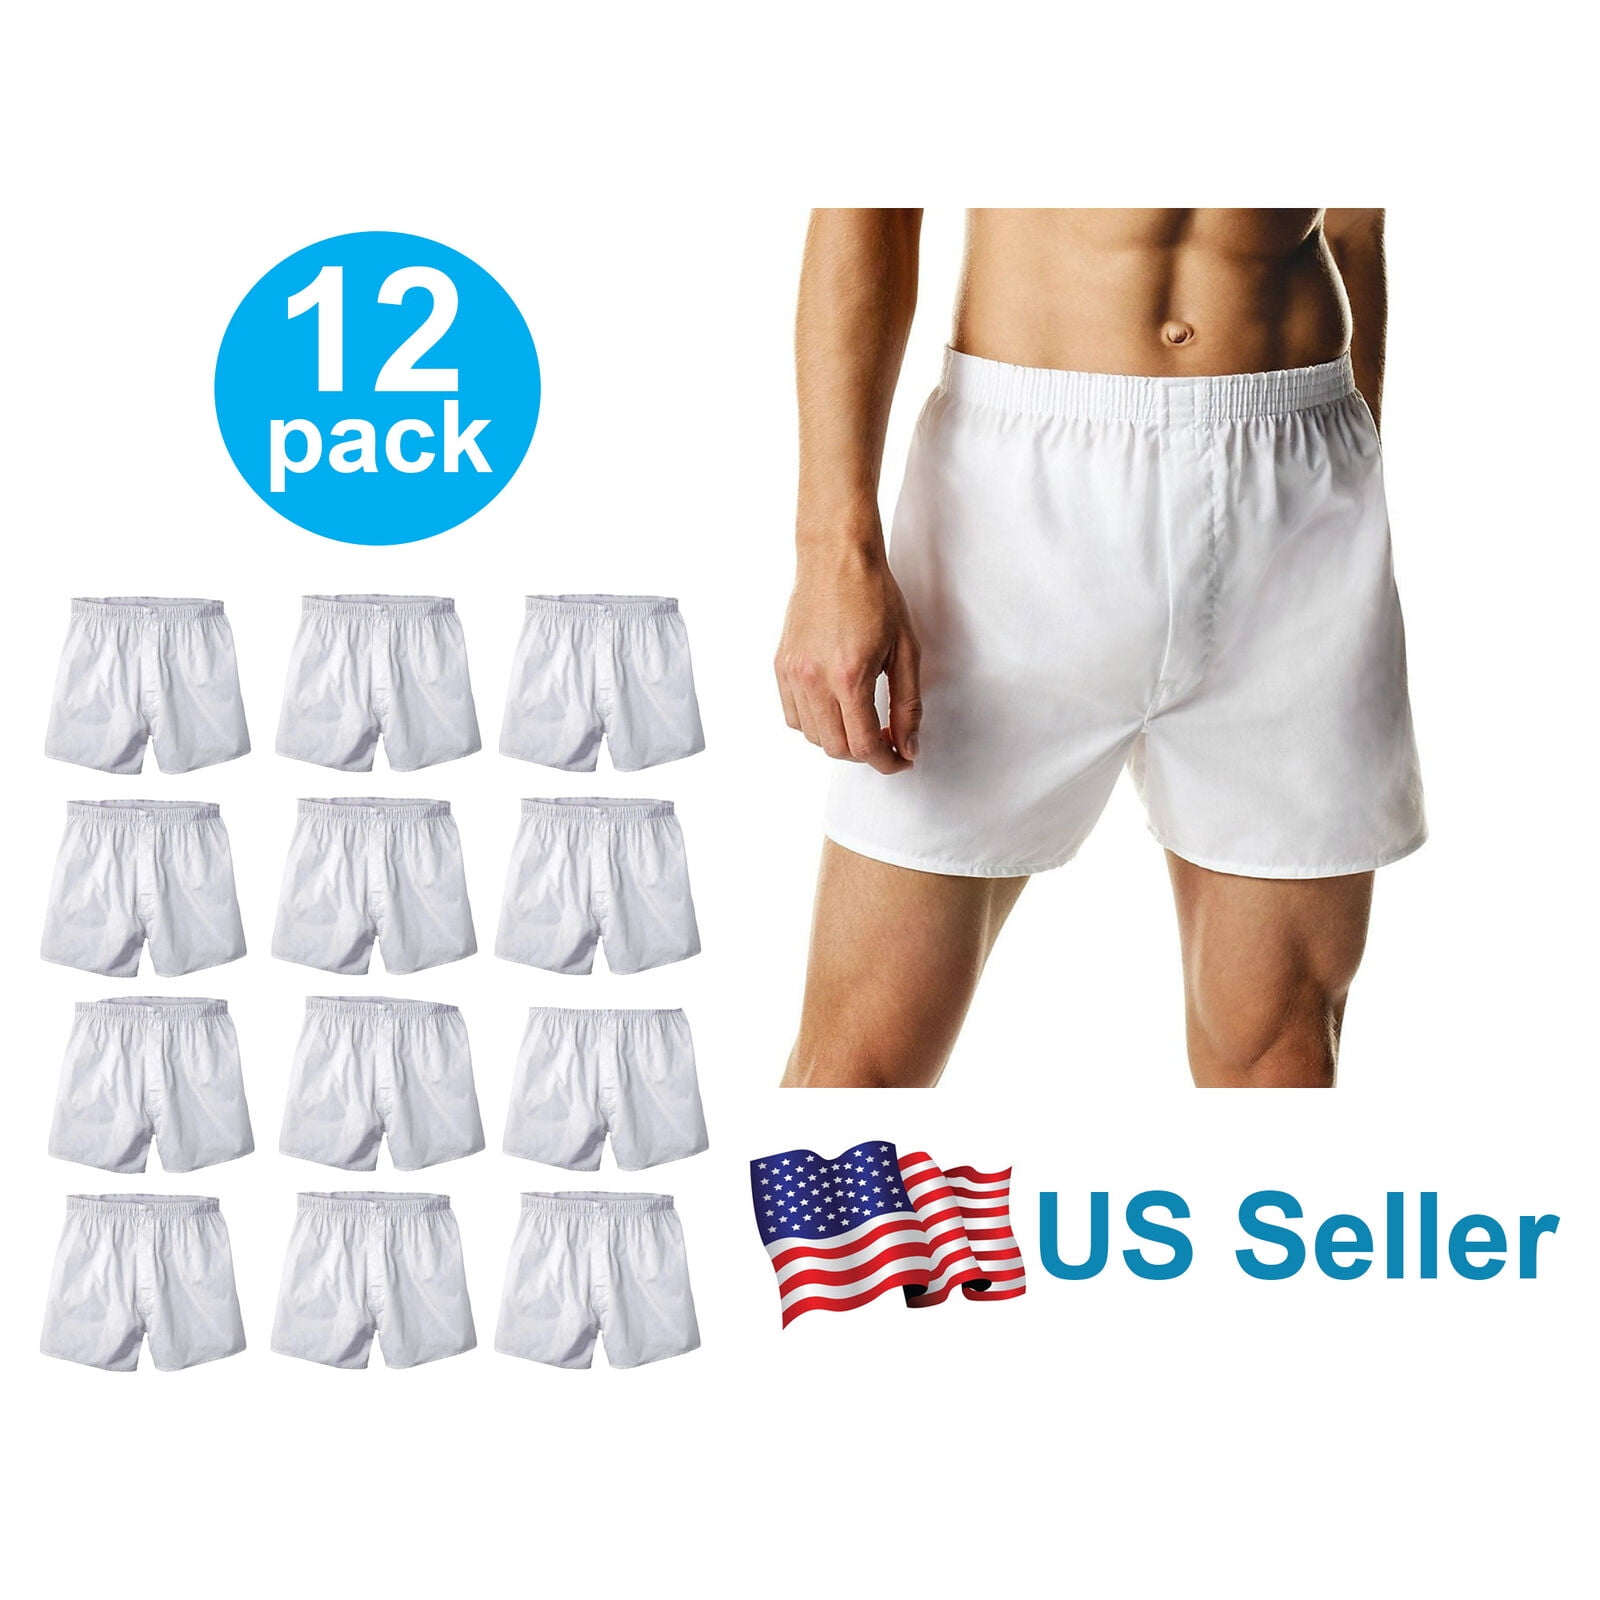 Details about  / Mens 3-12 Pack Polycotton Woven Check Boxer Shorts Underwear Breifs Short Trunks